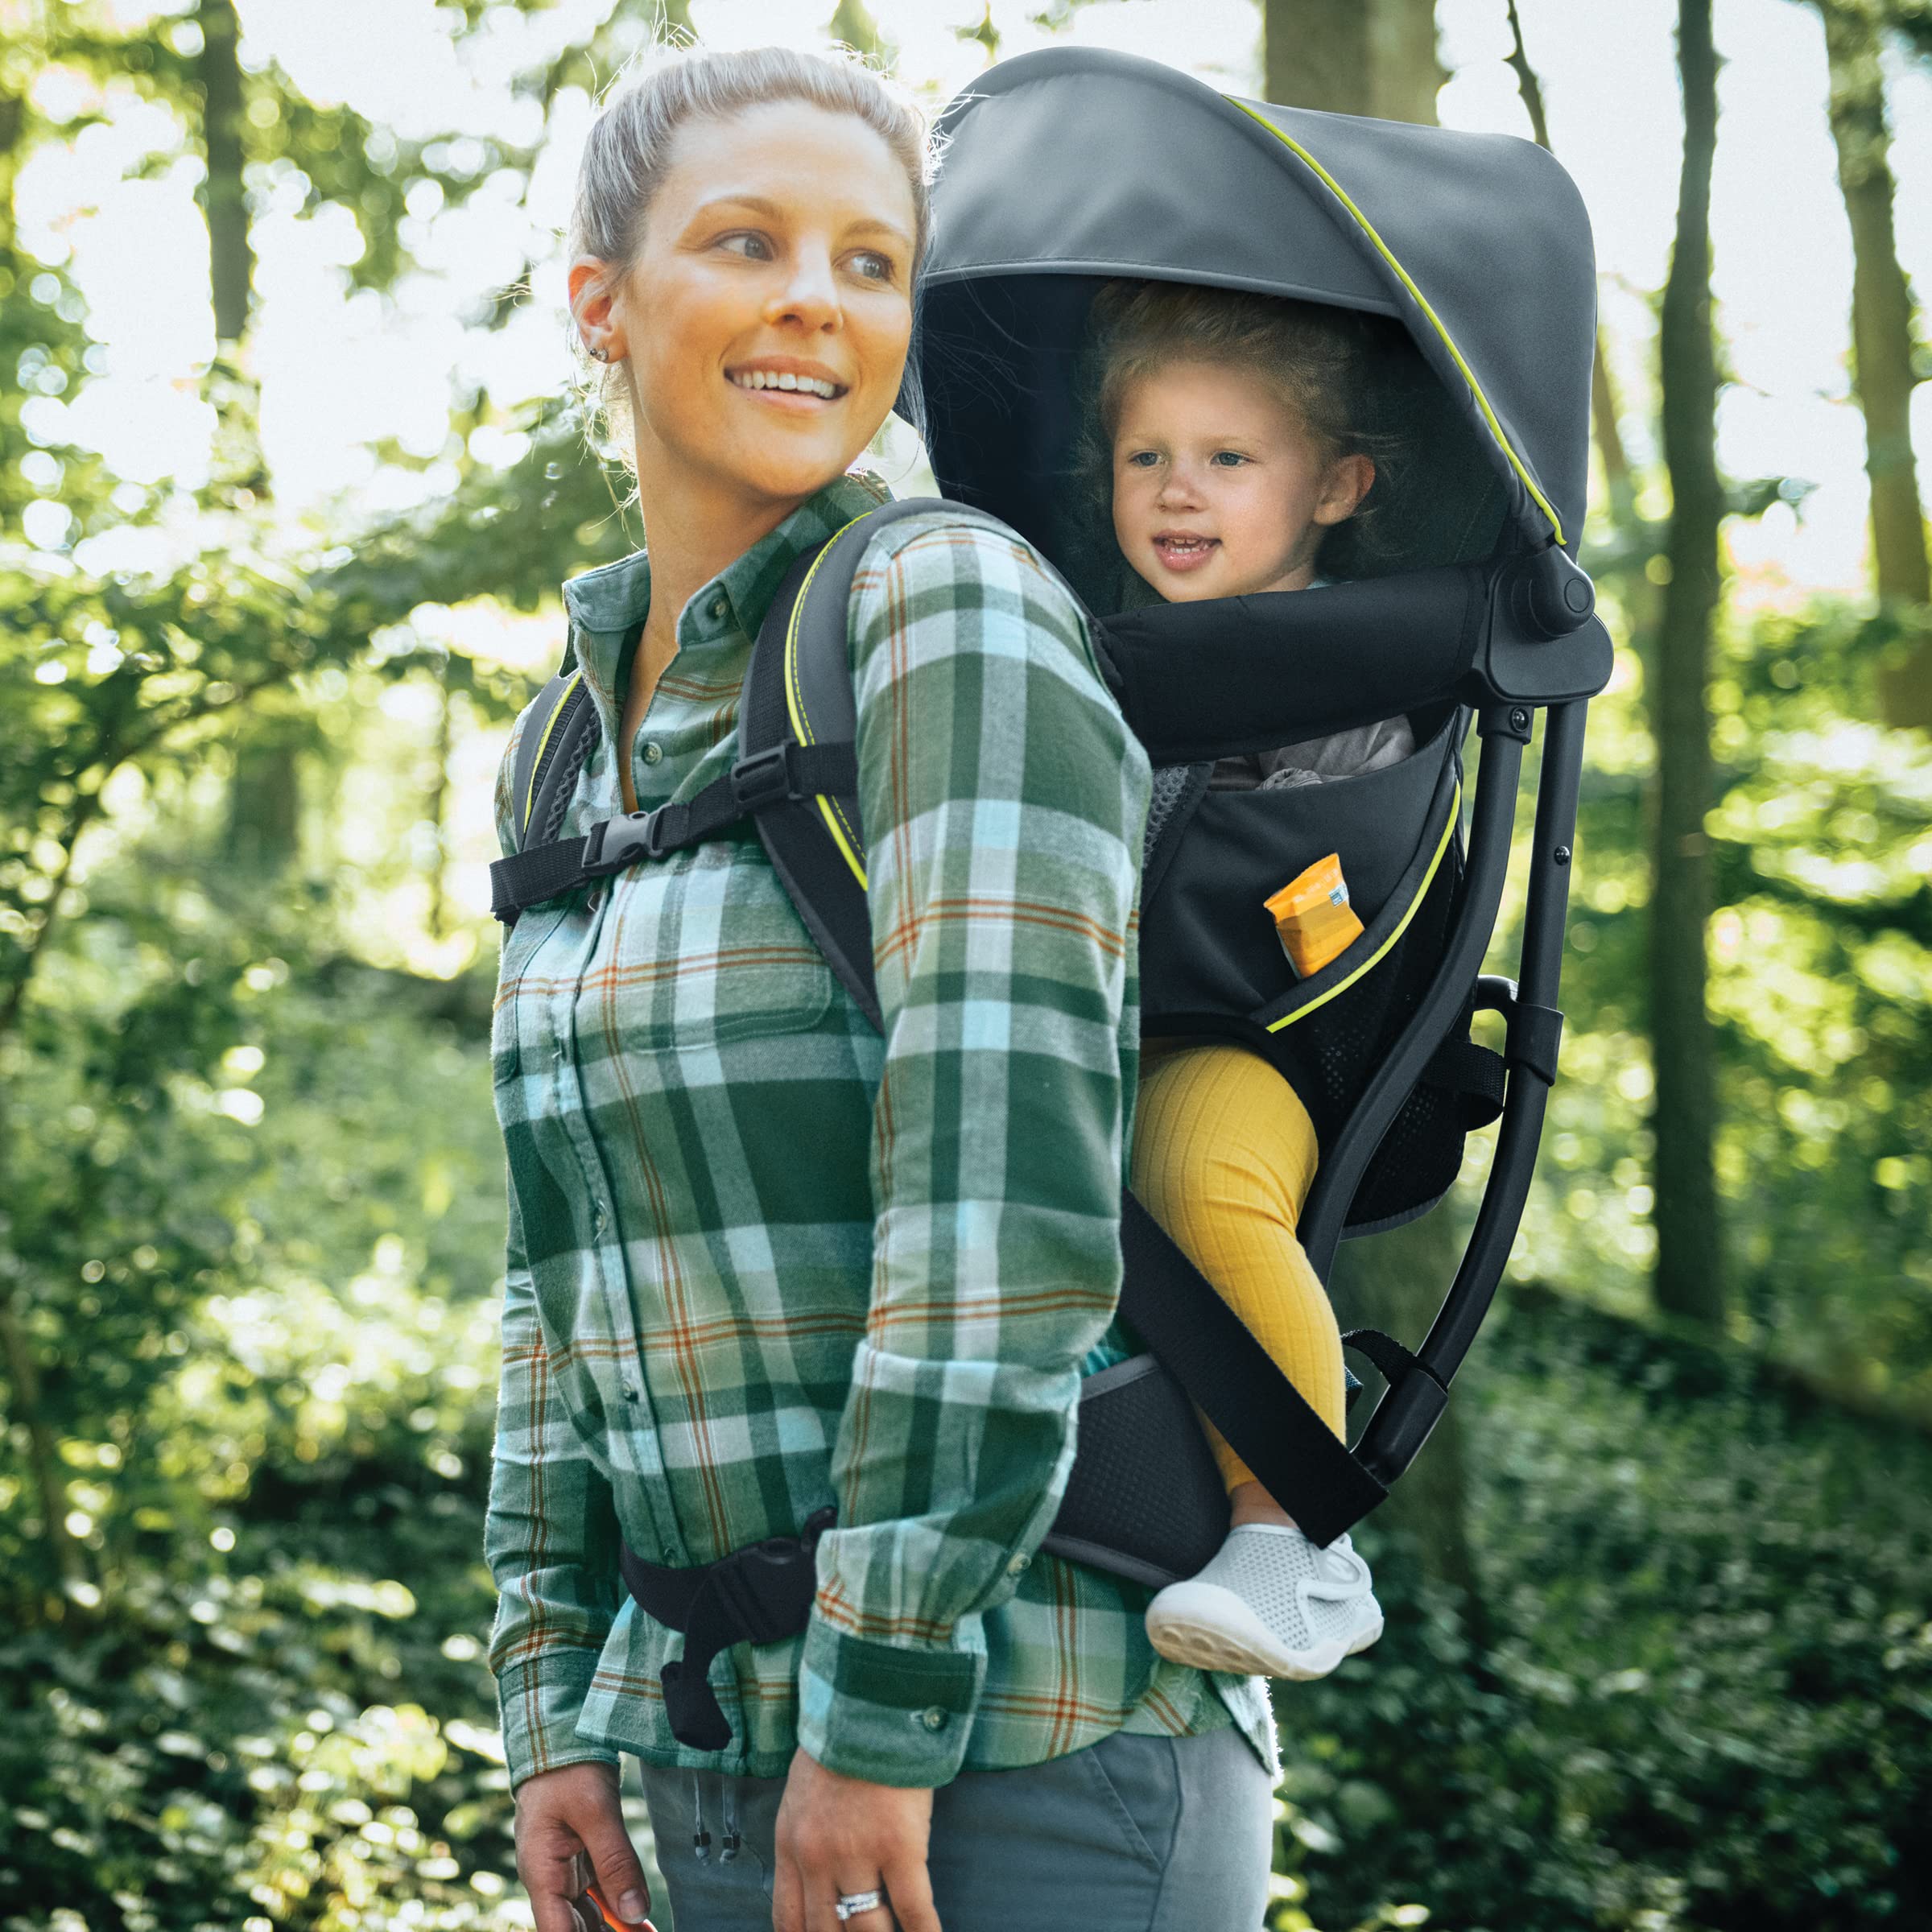 Chicco SmartSupport Aluminum Frame Backpack Carrier, Lightweight Baby Backpack Carrier | Solar/Grey - New Model